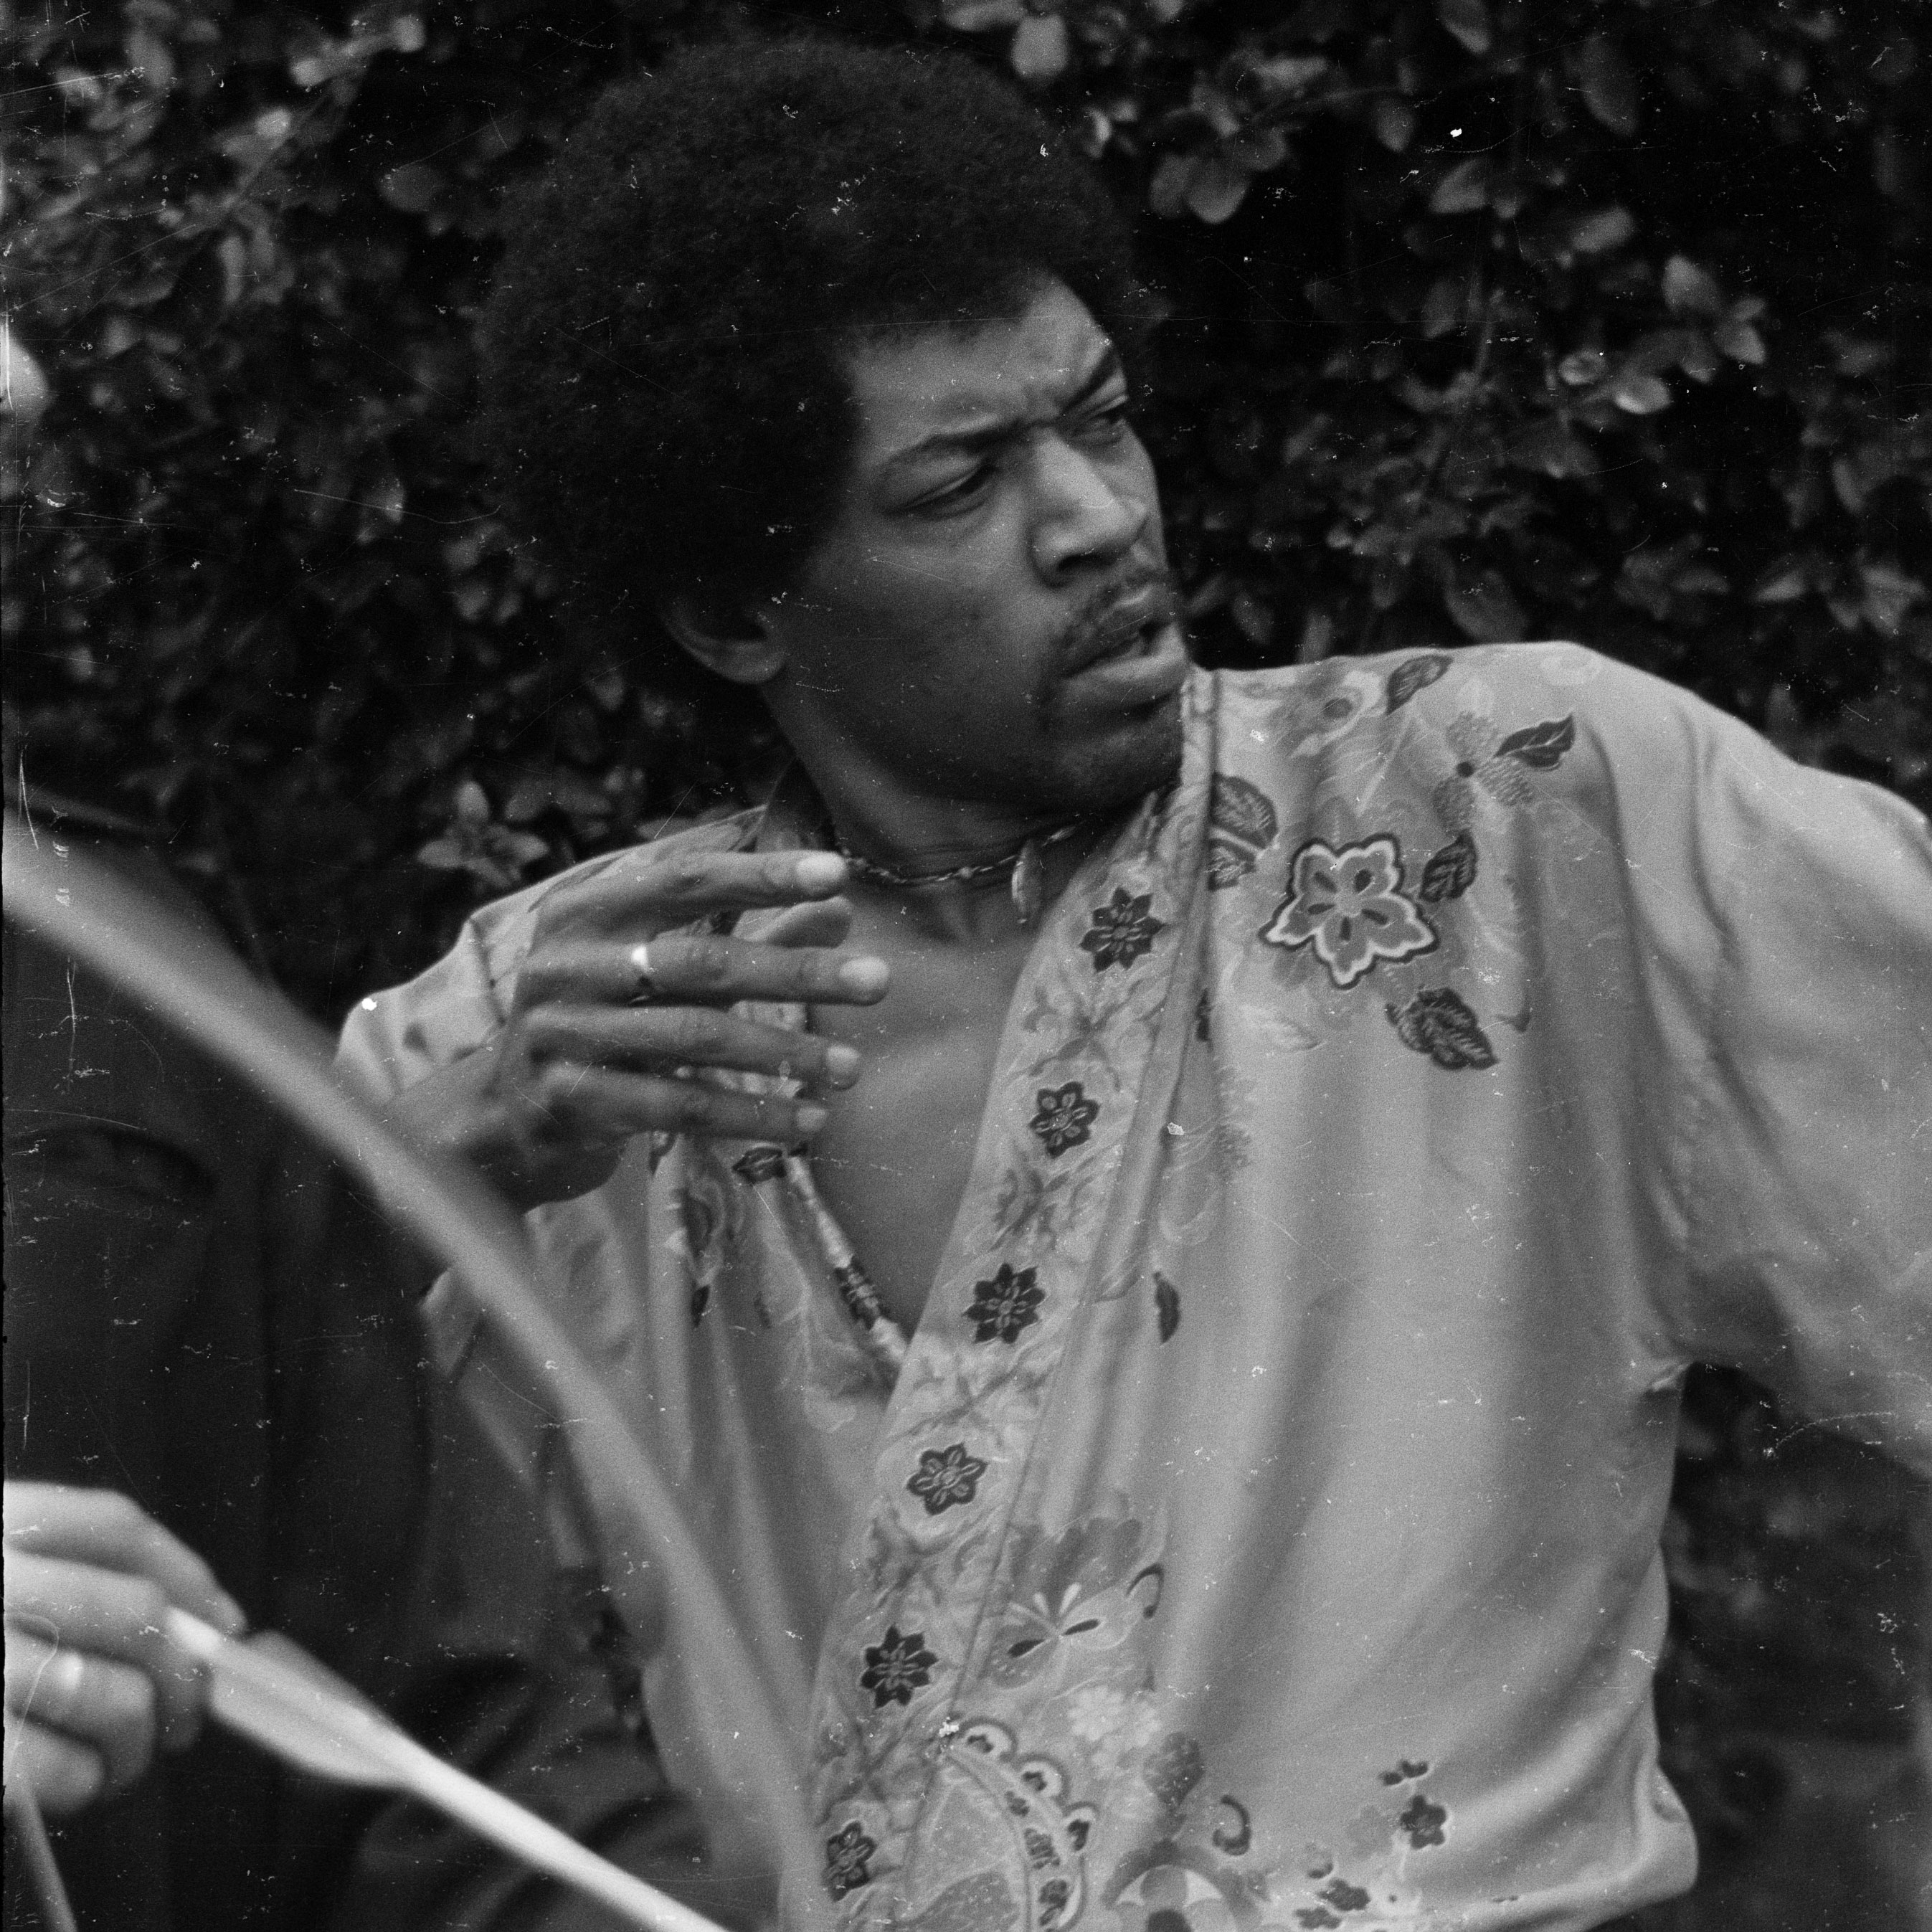 Jimi Hendrix wearing kimono at Woodstock rehearsals in upstate New York in August 1969